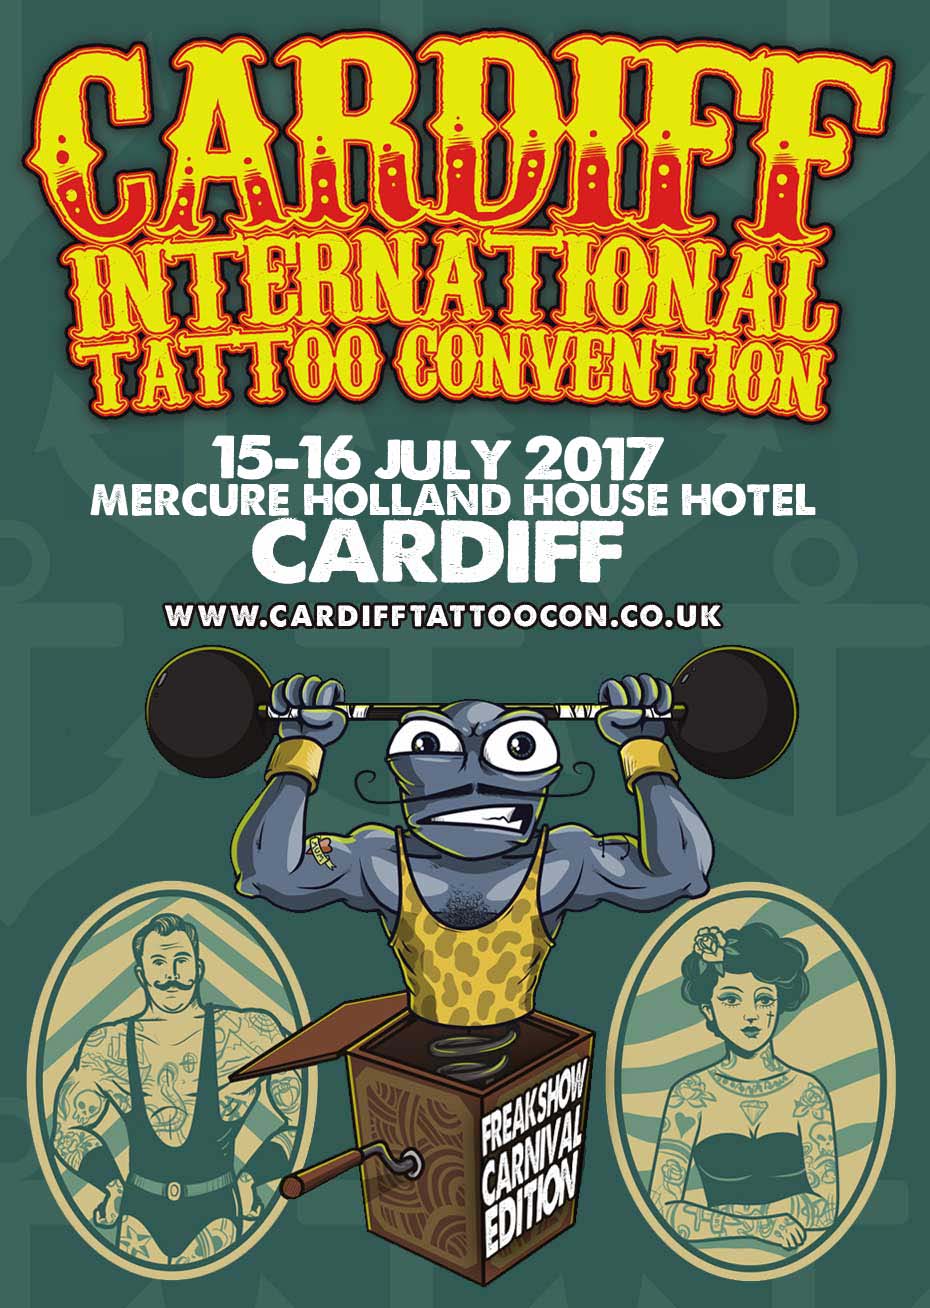 Cardiff International Tattoo Convention